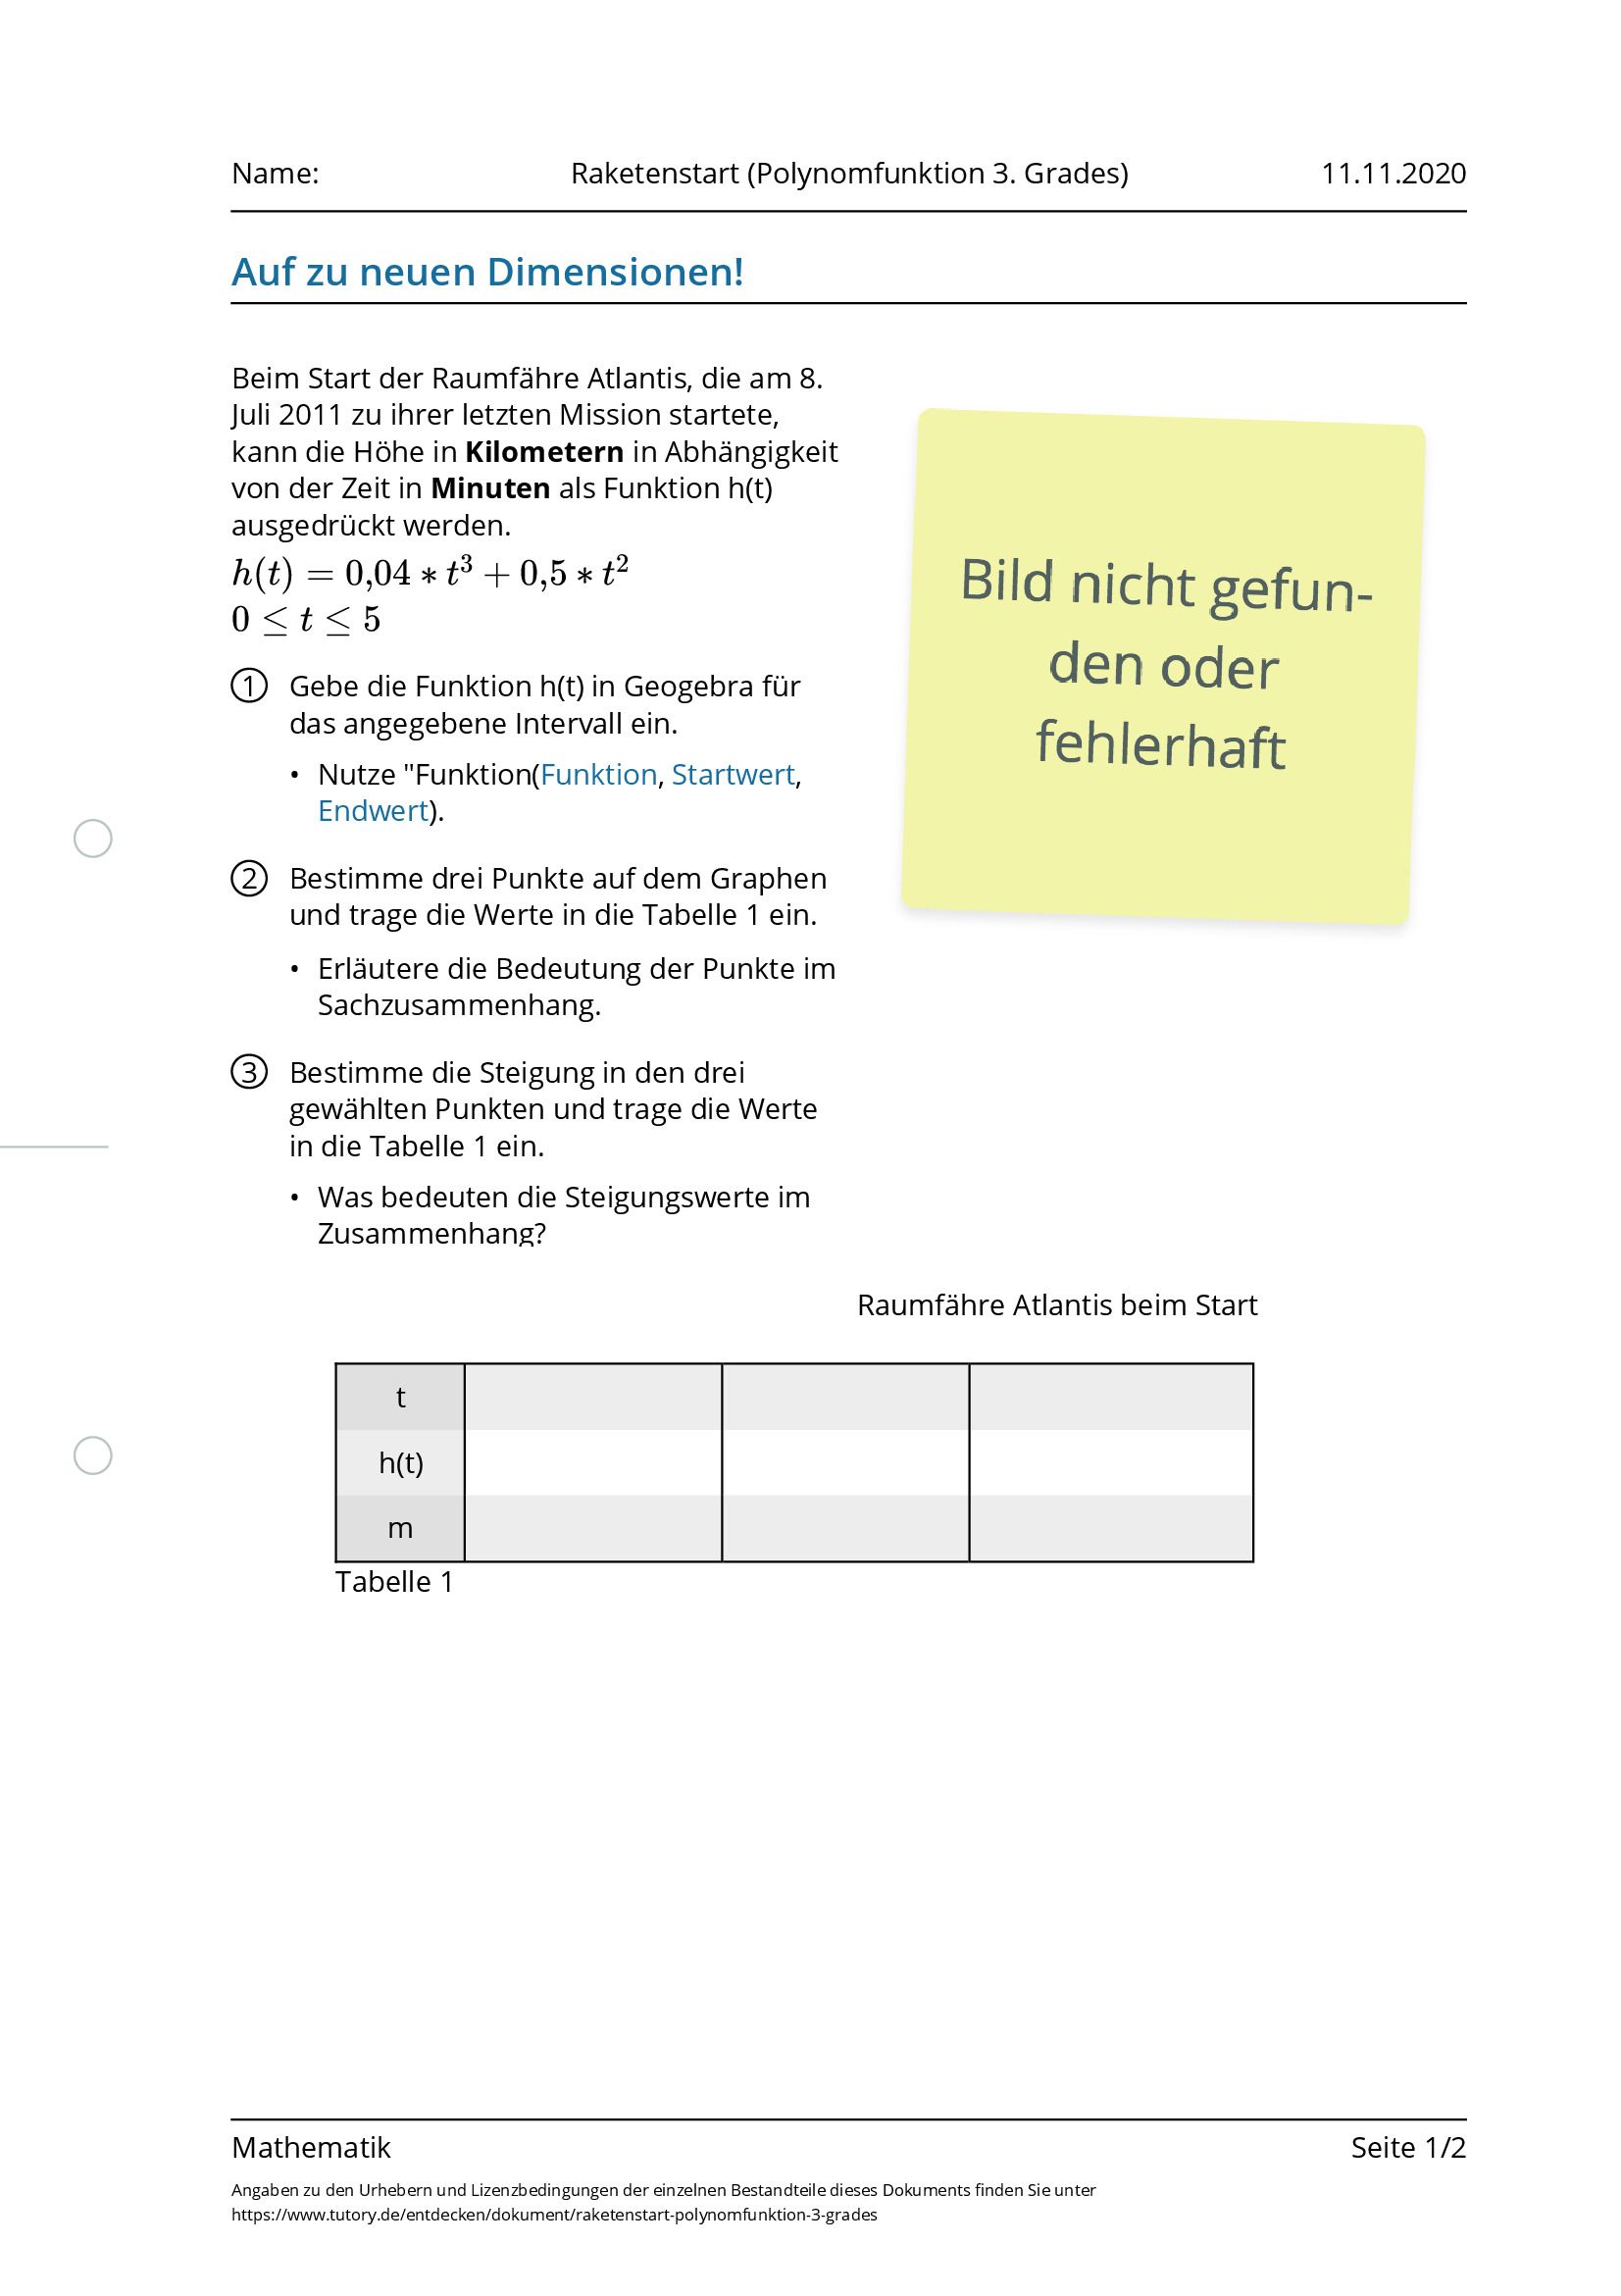 Arbeitsblatt - Raketenstart (Polynomfunktion 3. Grades) - Mathematik ...